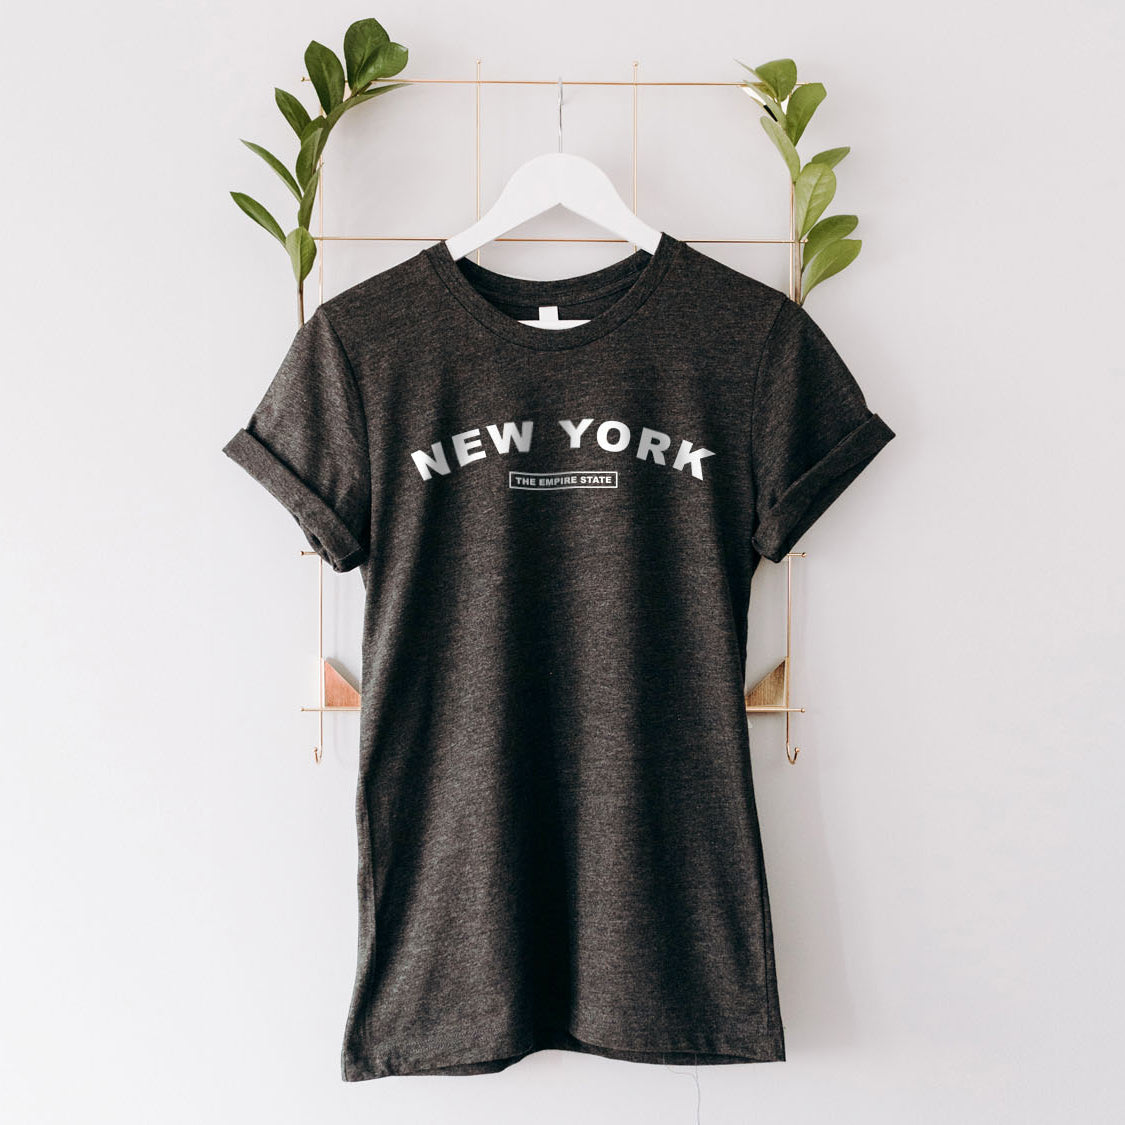 New York The Empire State T-shirt - United States Name & Slogan Minimal Design Printed Tee Shirt